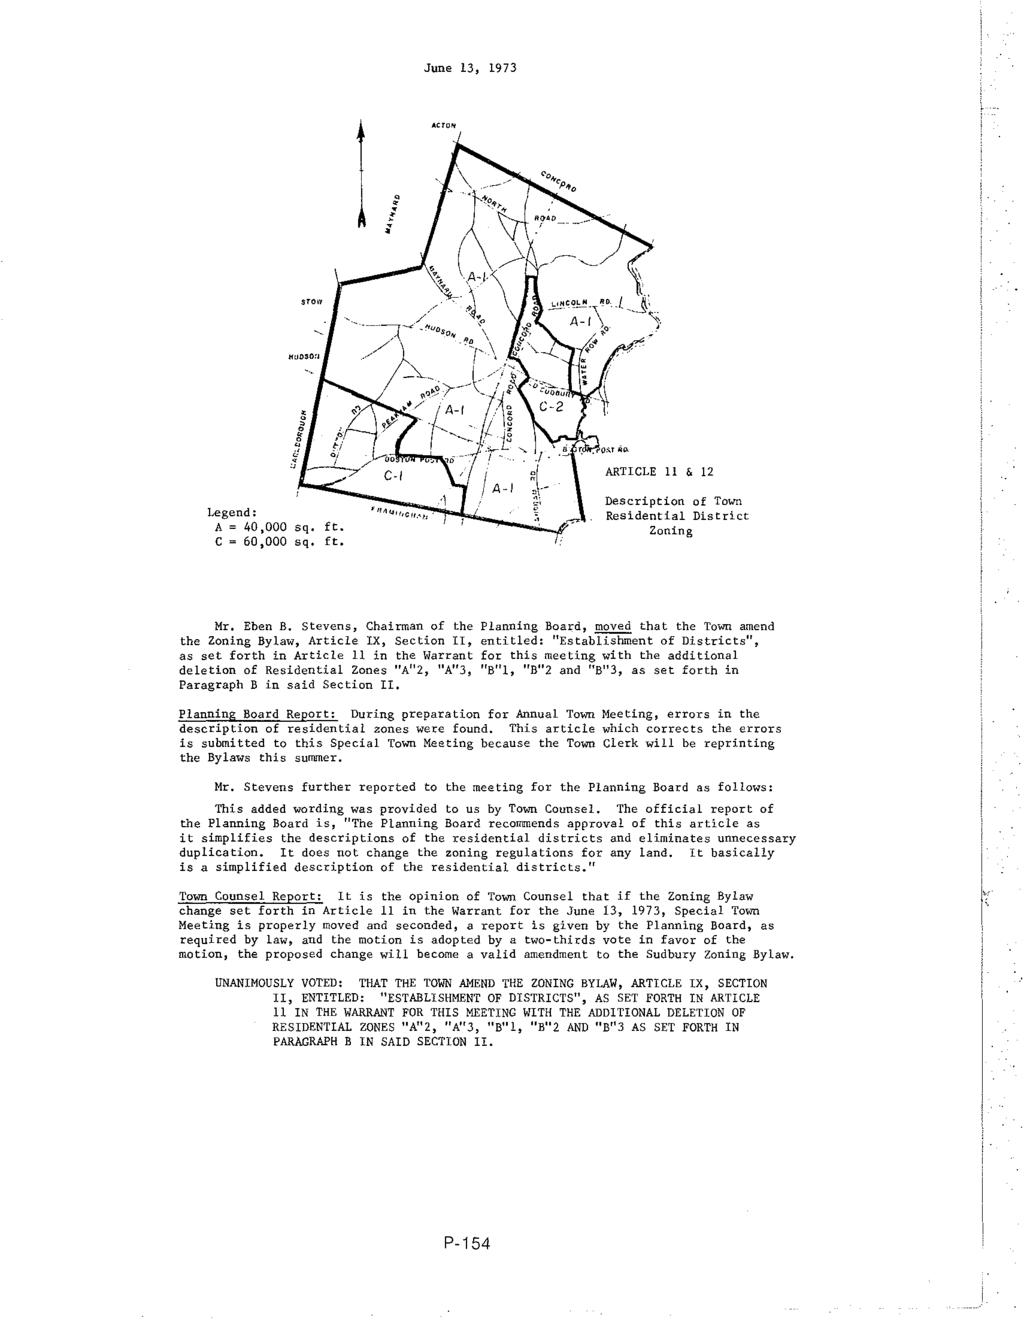 June 13, 1973.o.crc~ 1 0! sro~~ / I J " ';; i /IU0$0:1,; 0 8 i " Legend: A 40,000 sq. ft. c ~ 60,000 sq. ft. F li~'>u,cii.'ll. I A-I ARTICLE 11 & 12 Description of Town Residential District Zoning Mr.